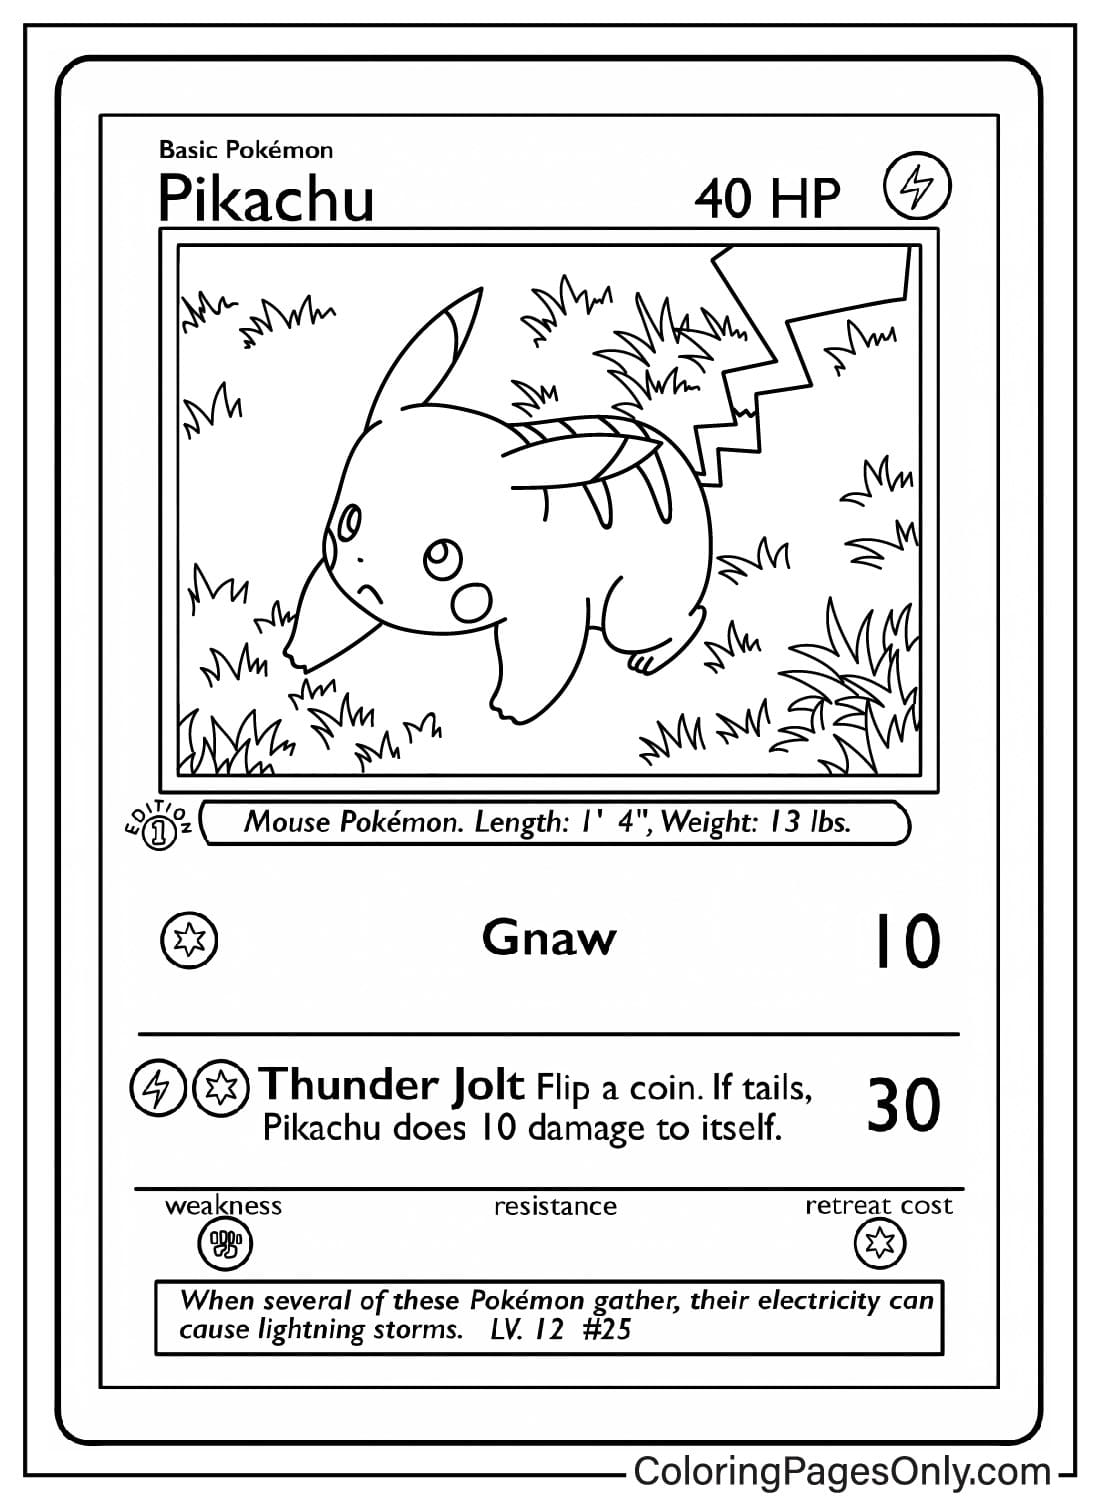 Pikachu Pokemon Card Malseite von Pokemon Card